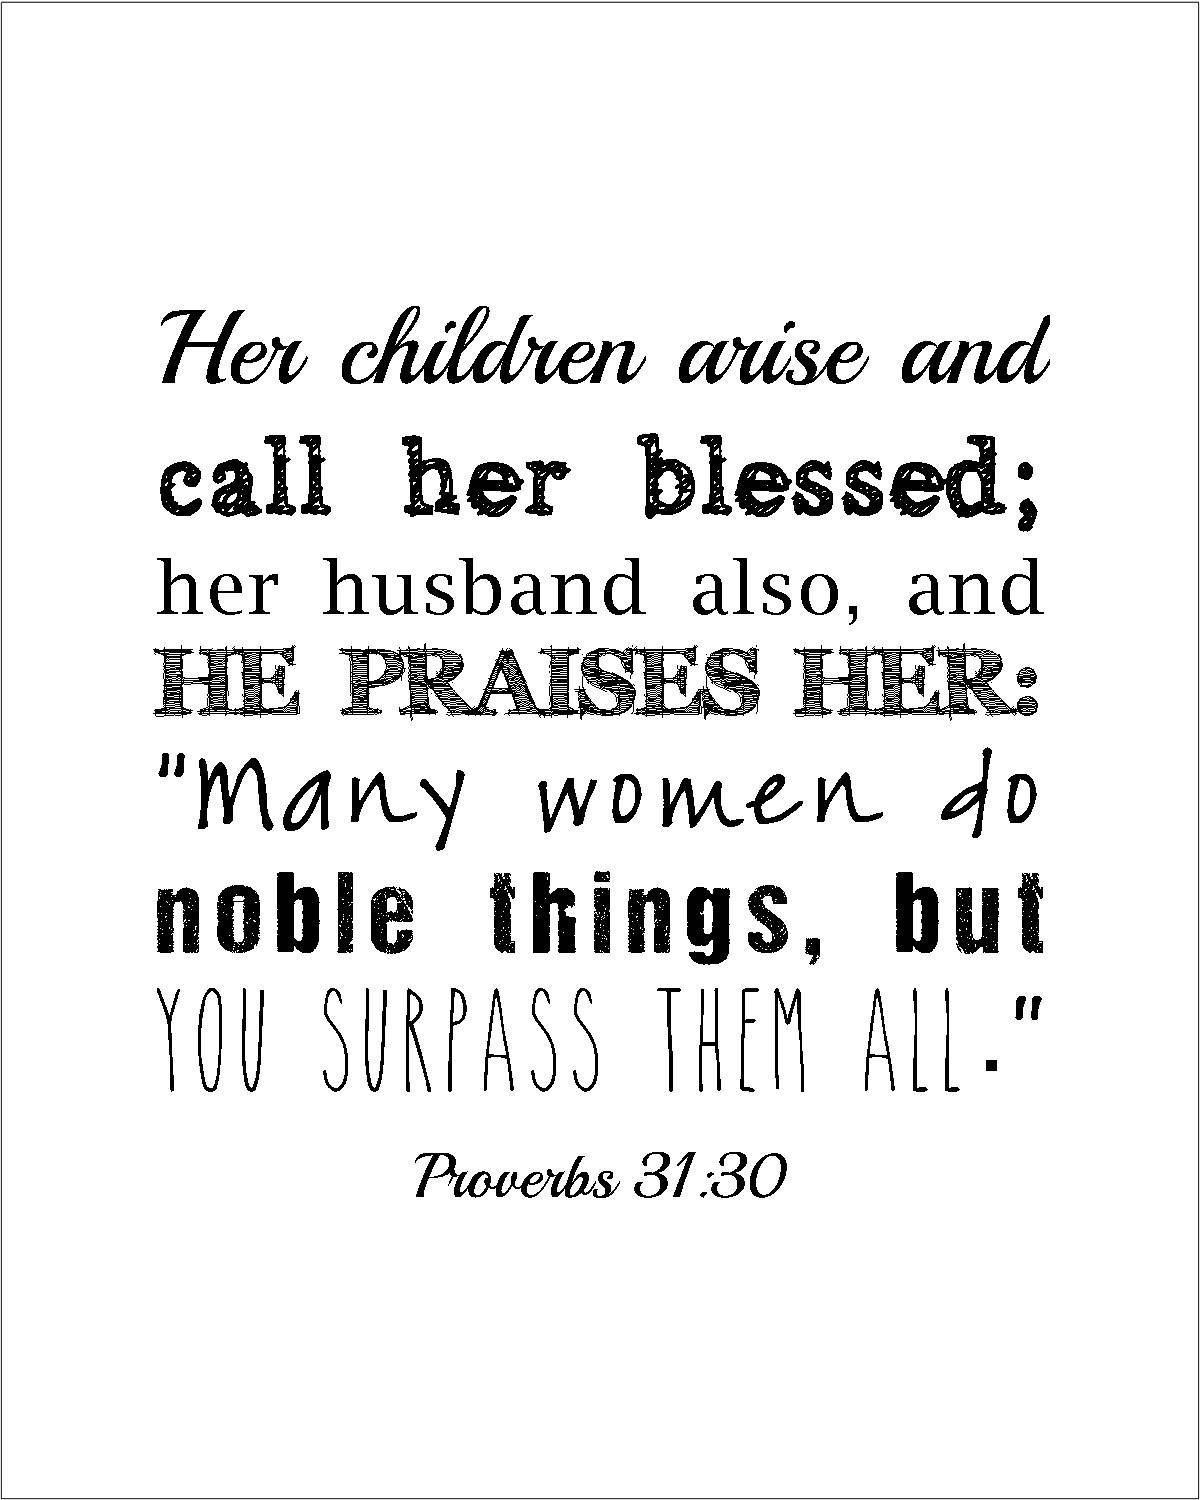 Motherhood Bible Quotes
 Mother Bible Verses Quotes QuotesGram